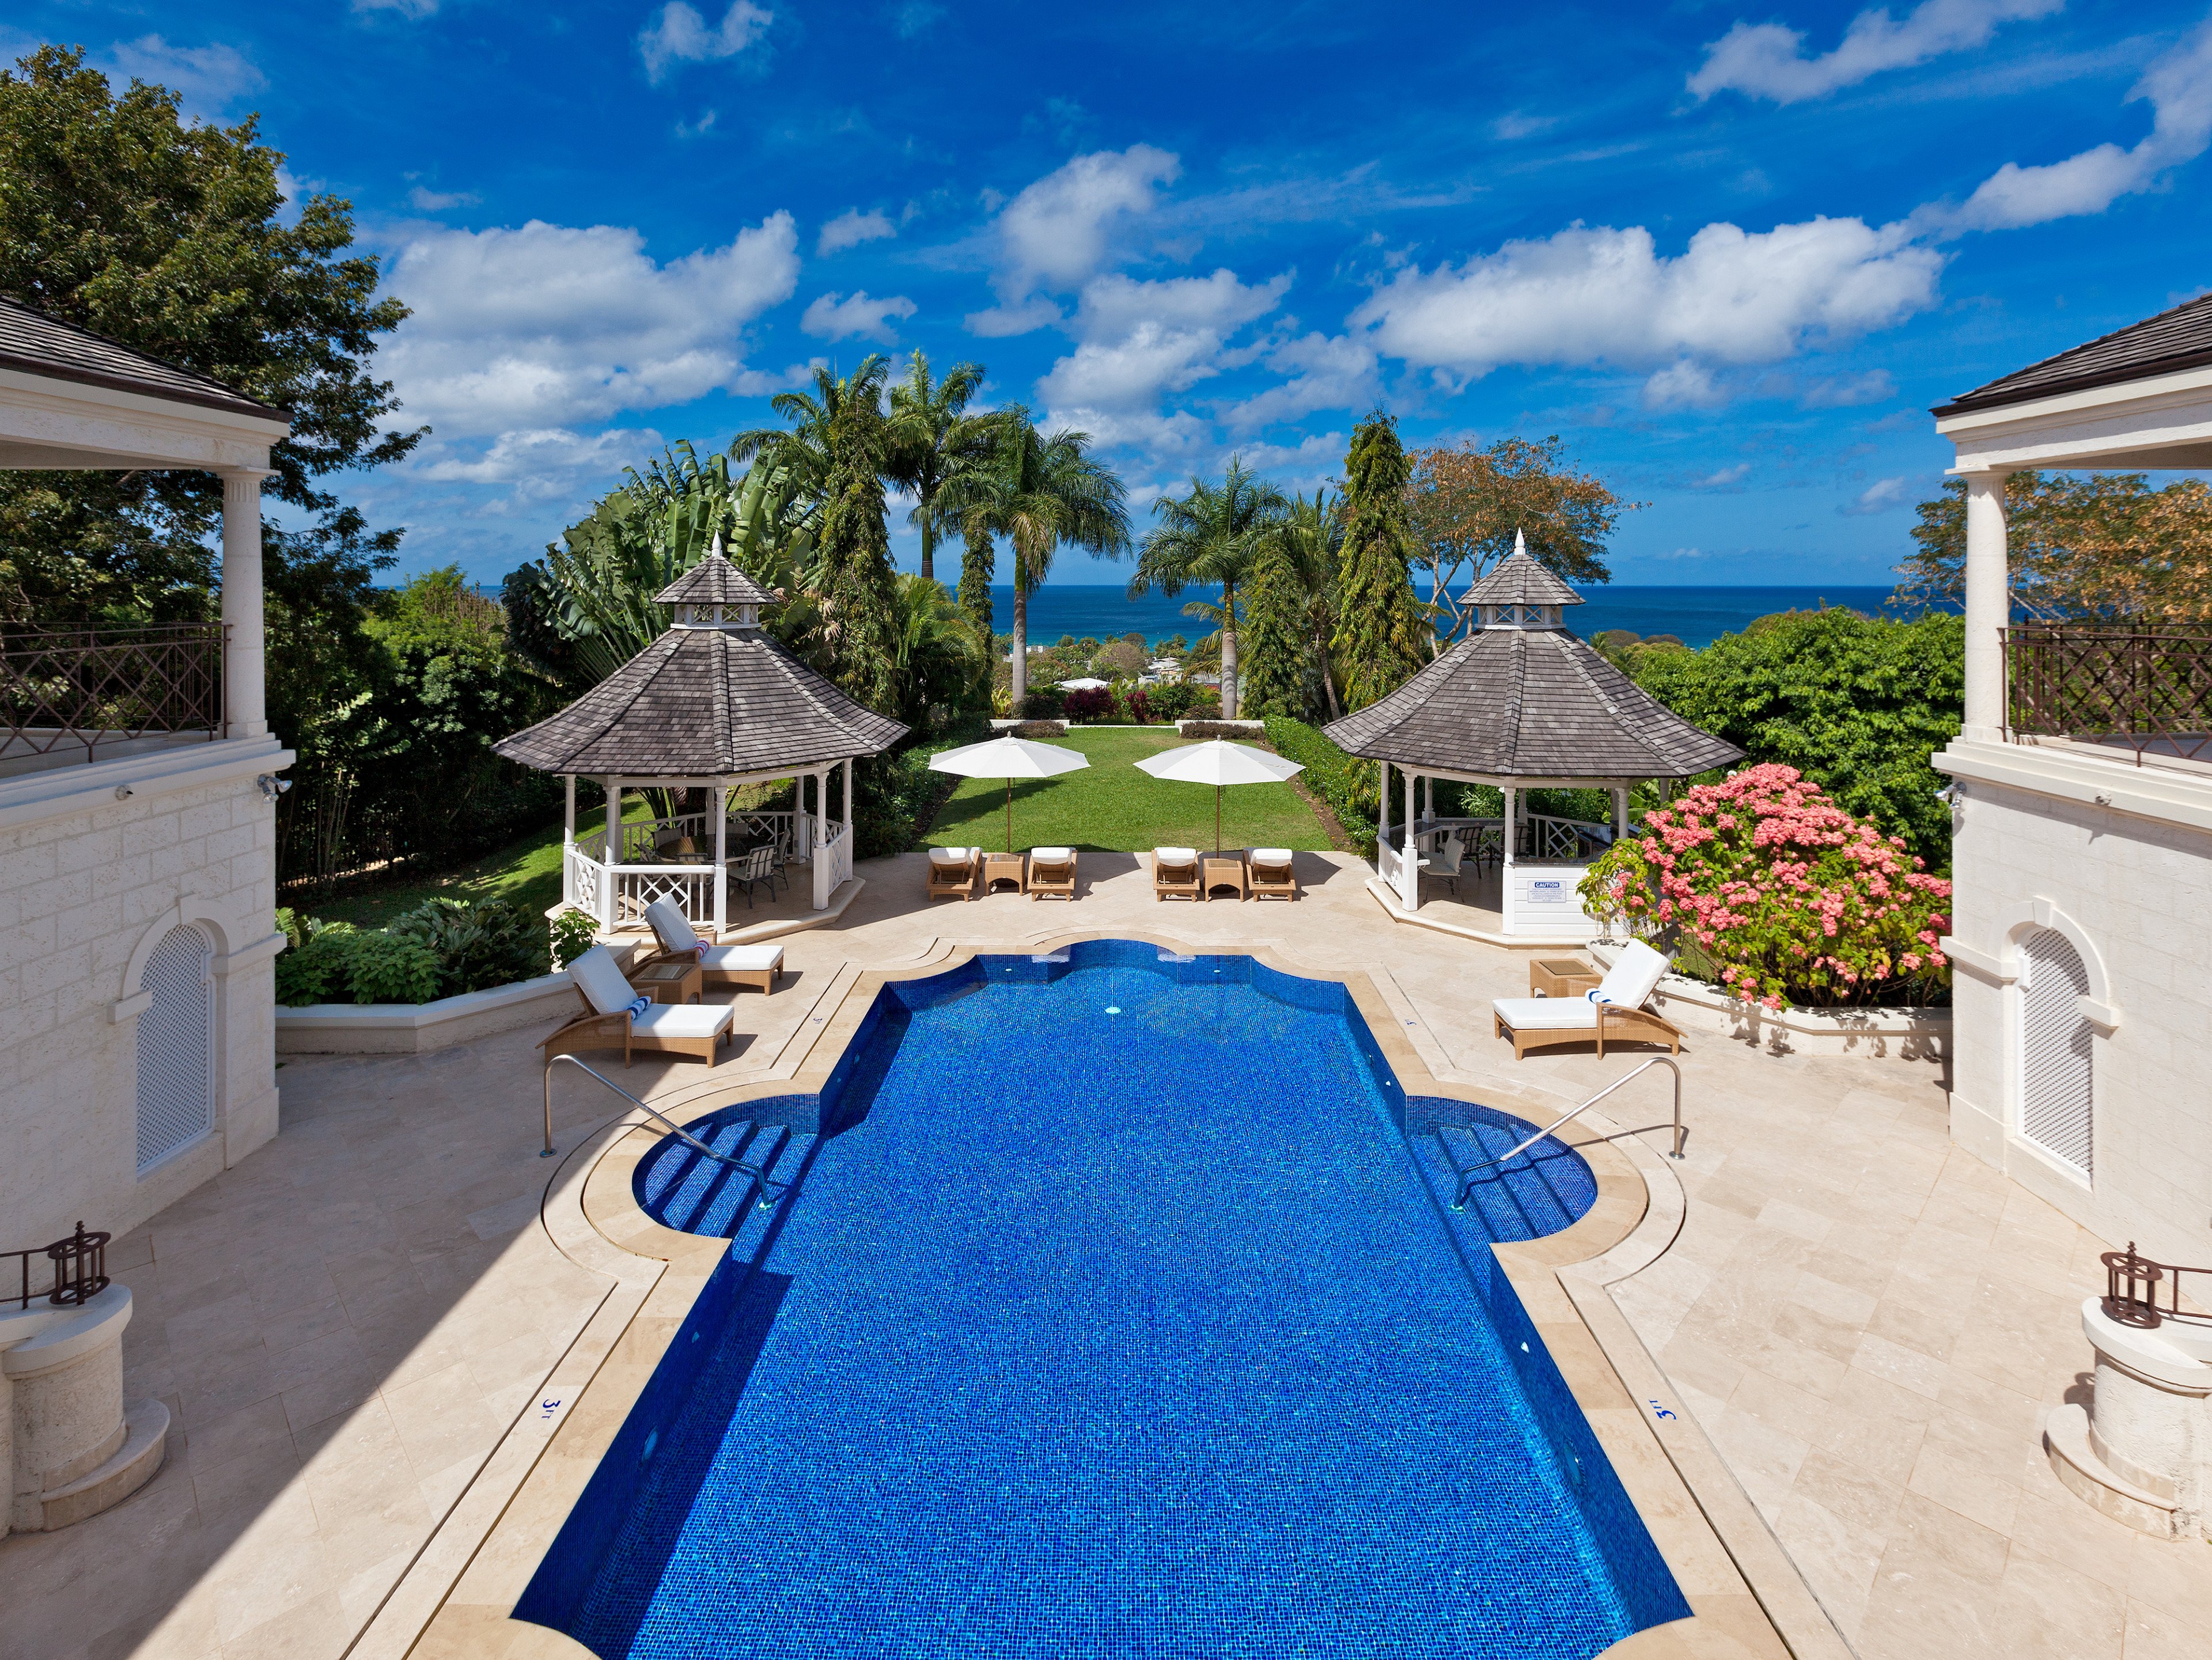 Sugar Hill Illusion Sugar Hill Resort Barbados rentals with pools